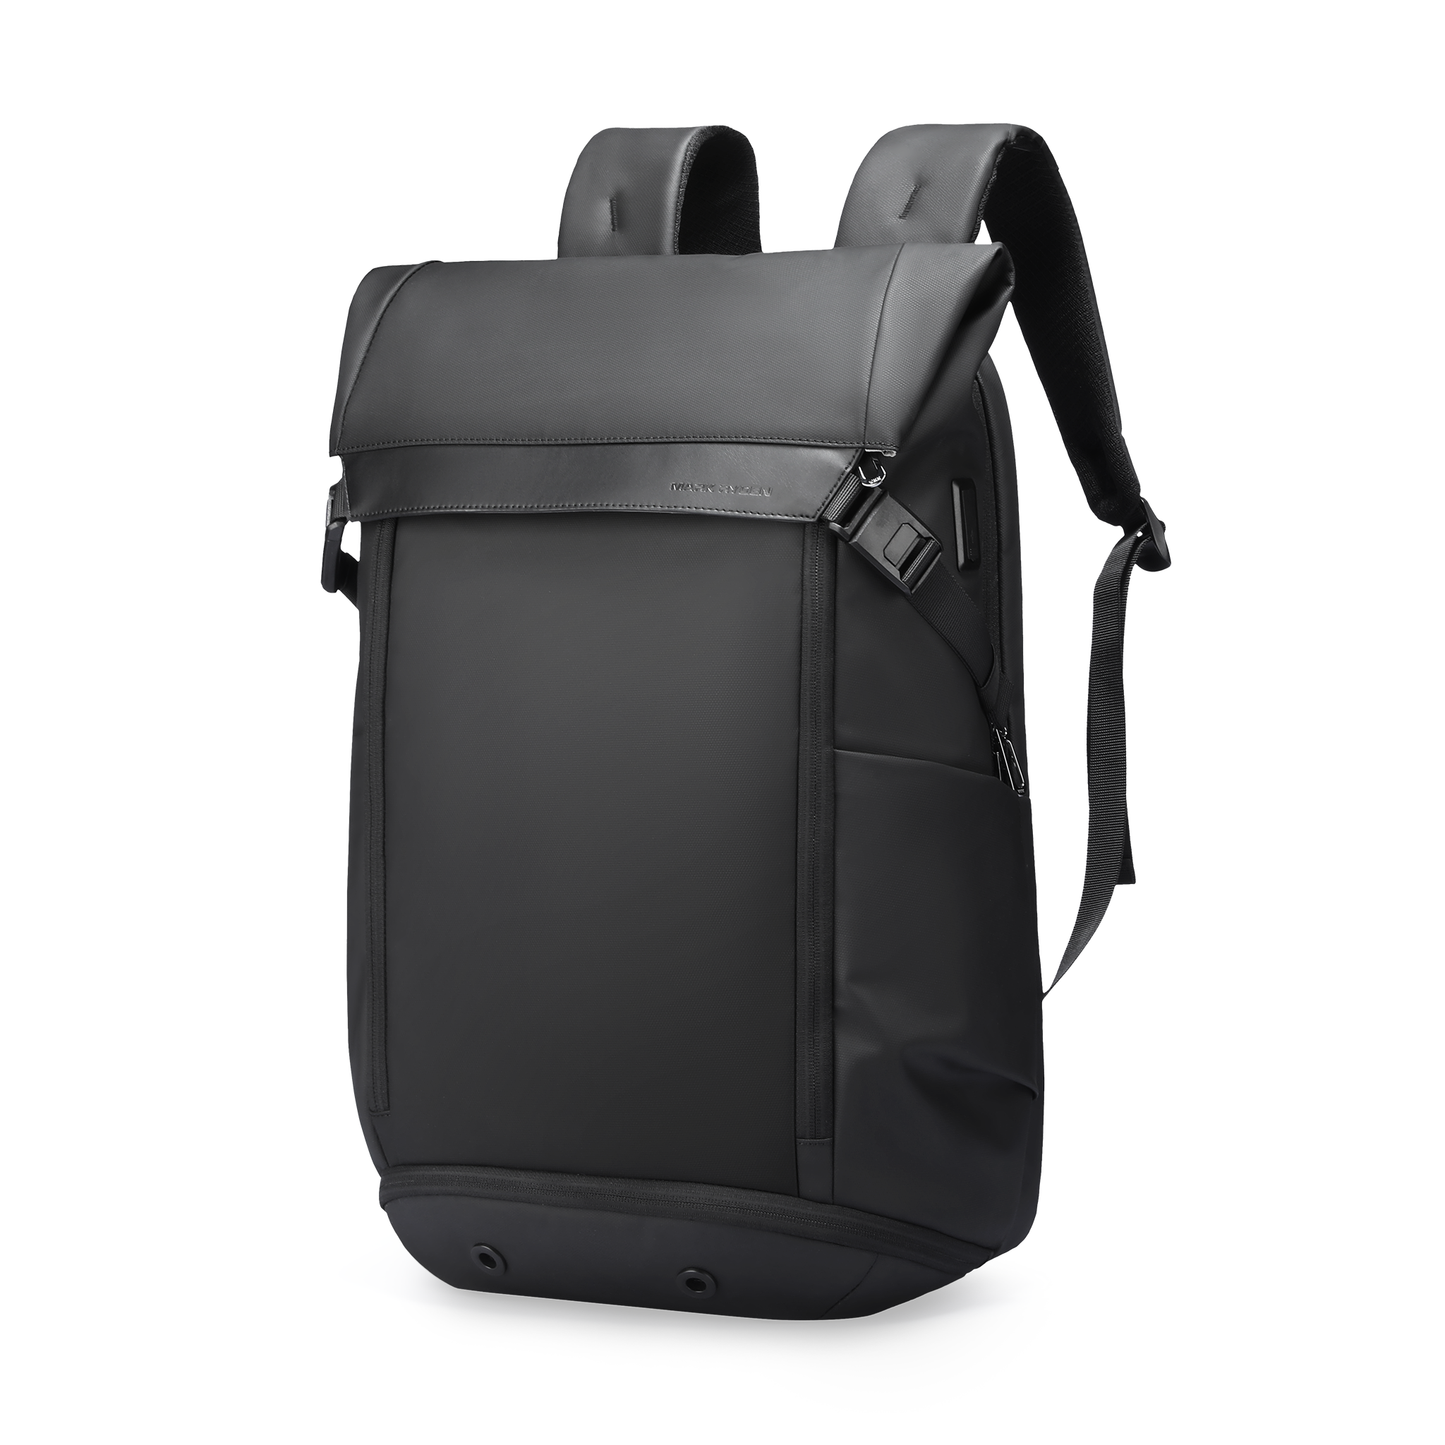 Urban Travel:  Multifunctional backpack